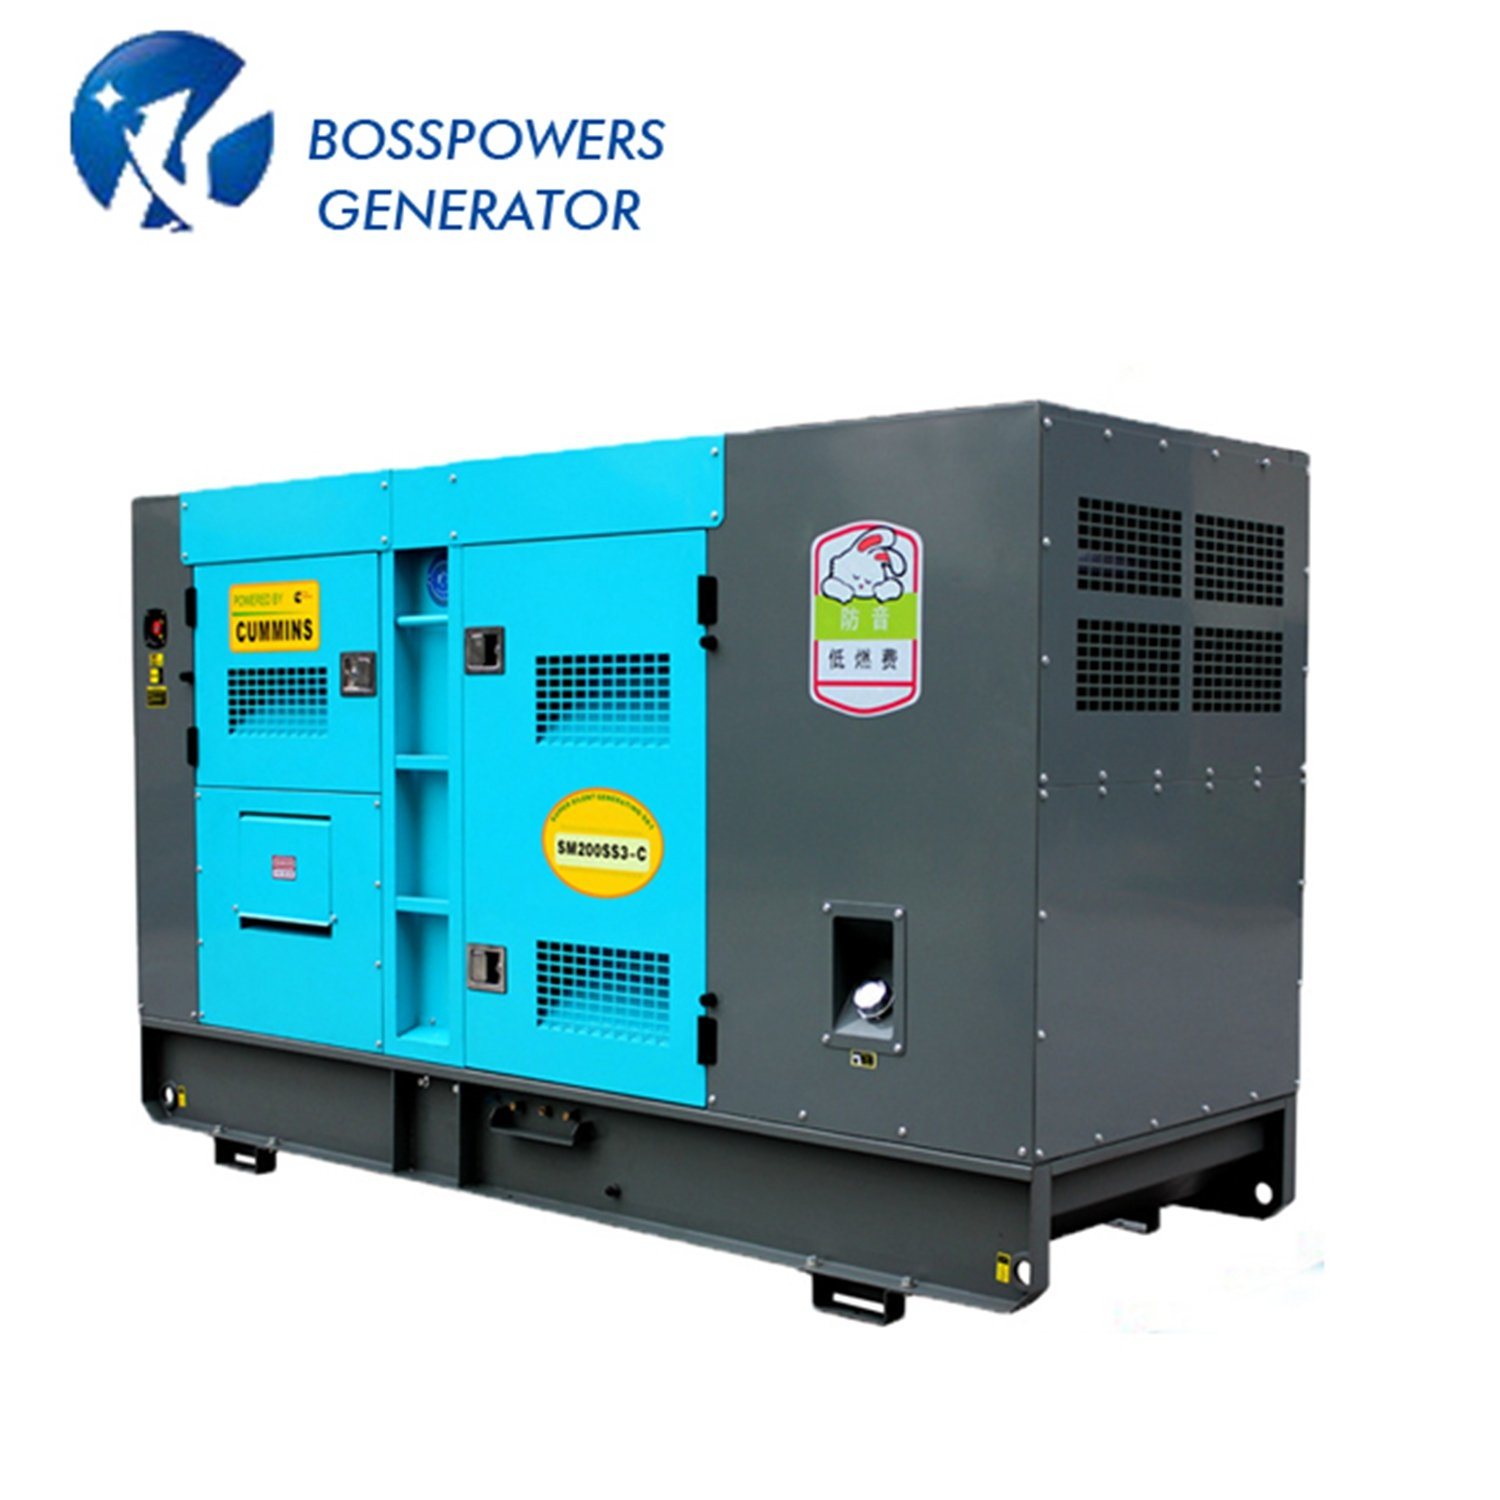 60Hz 143kw UK Diesel Engine Prime Power Electric Diesel Generator Set China Manufacturer